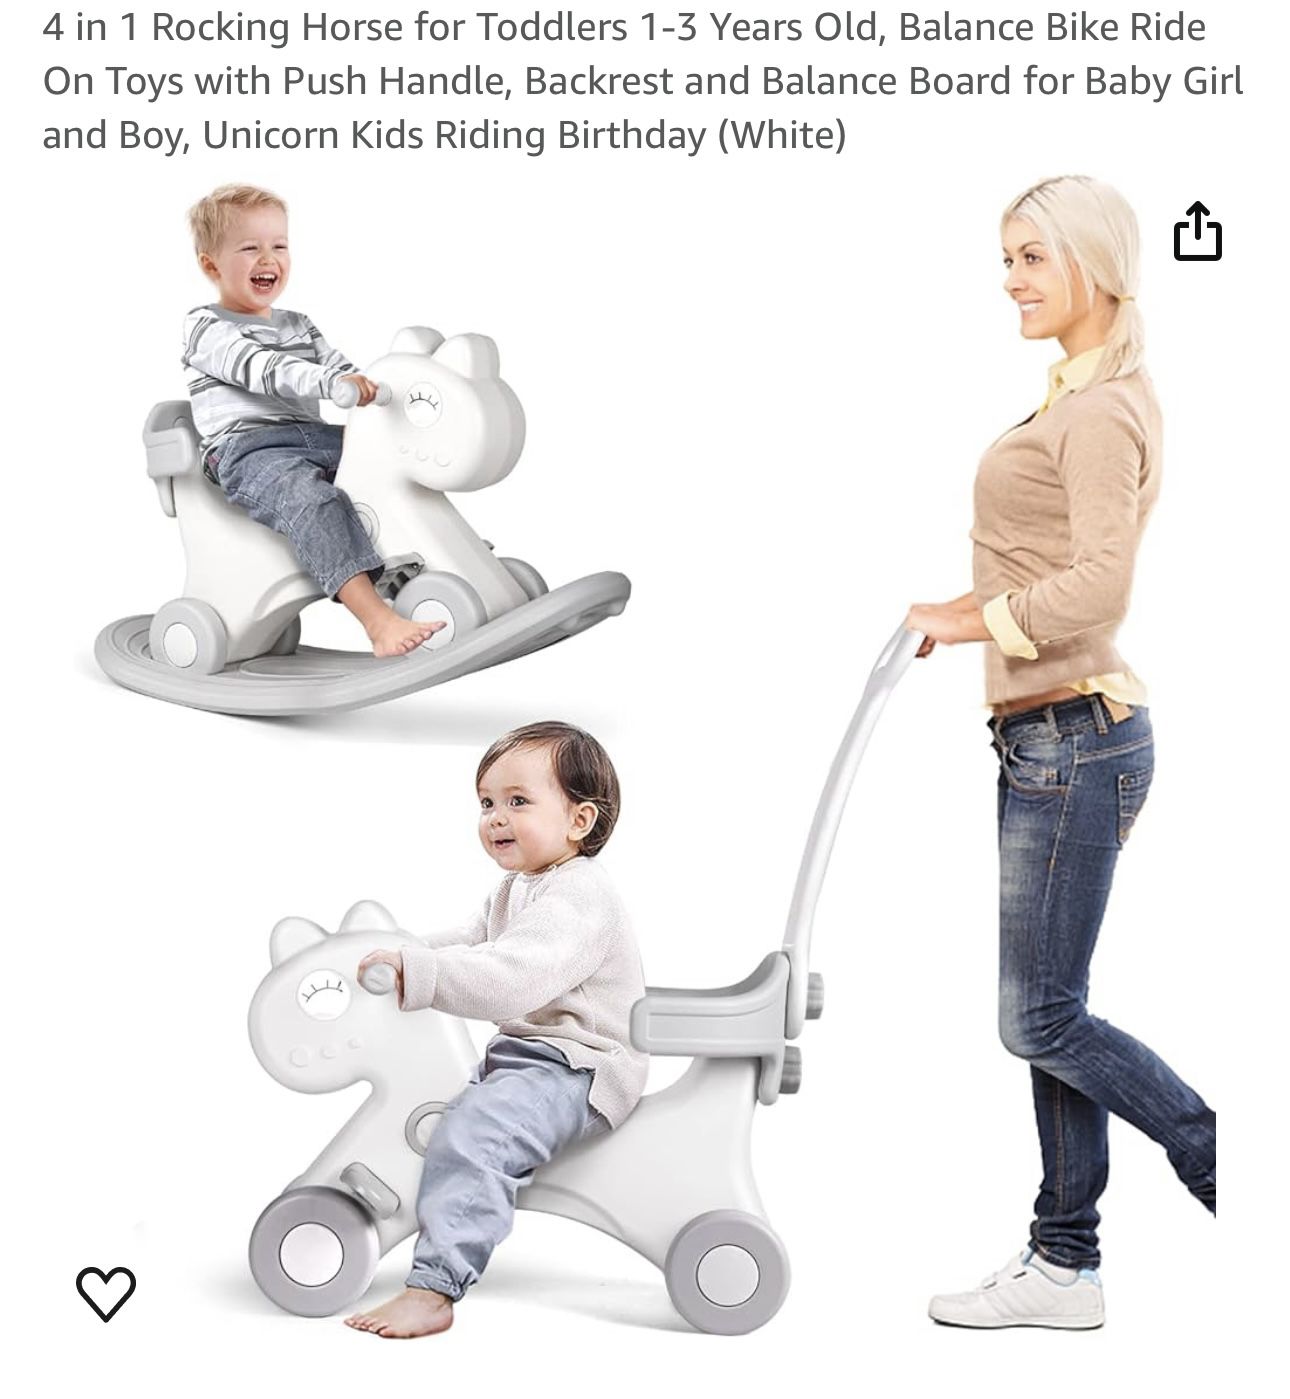 Baby Infant Child 4 in 1 rocking horse balance bike. 